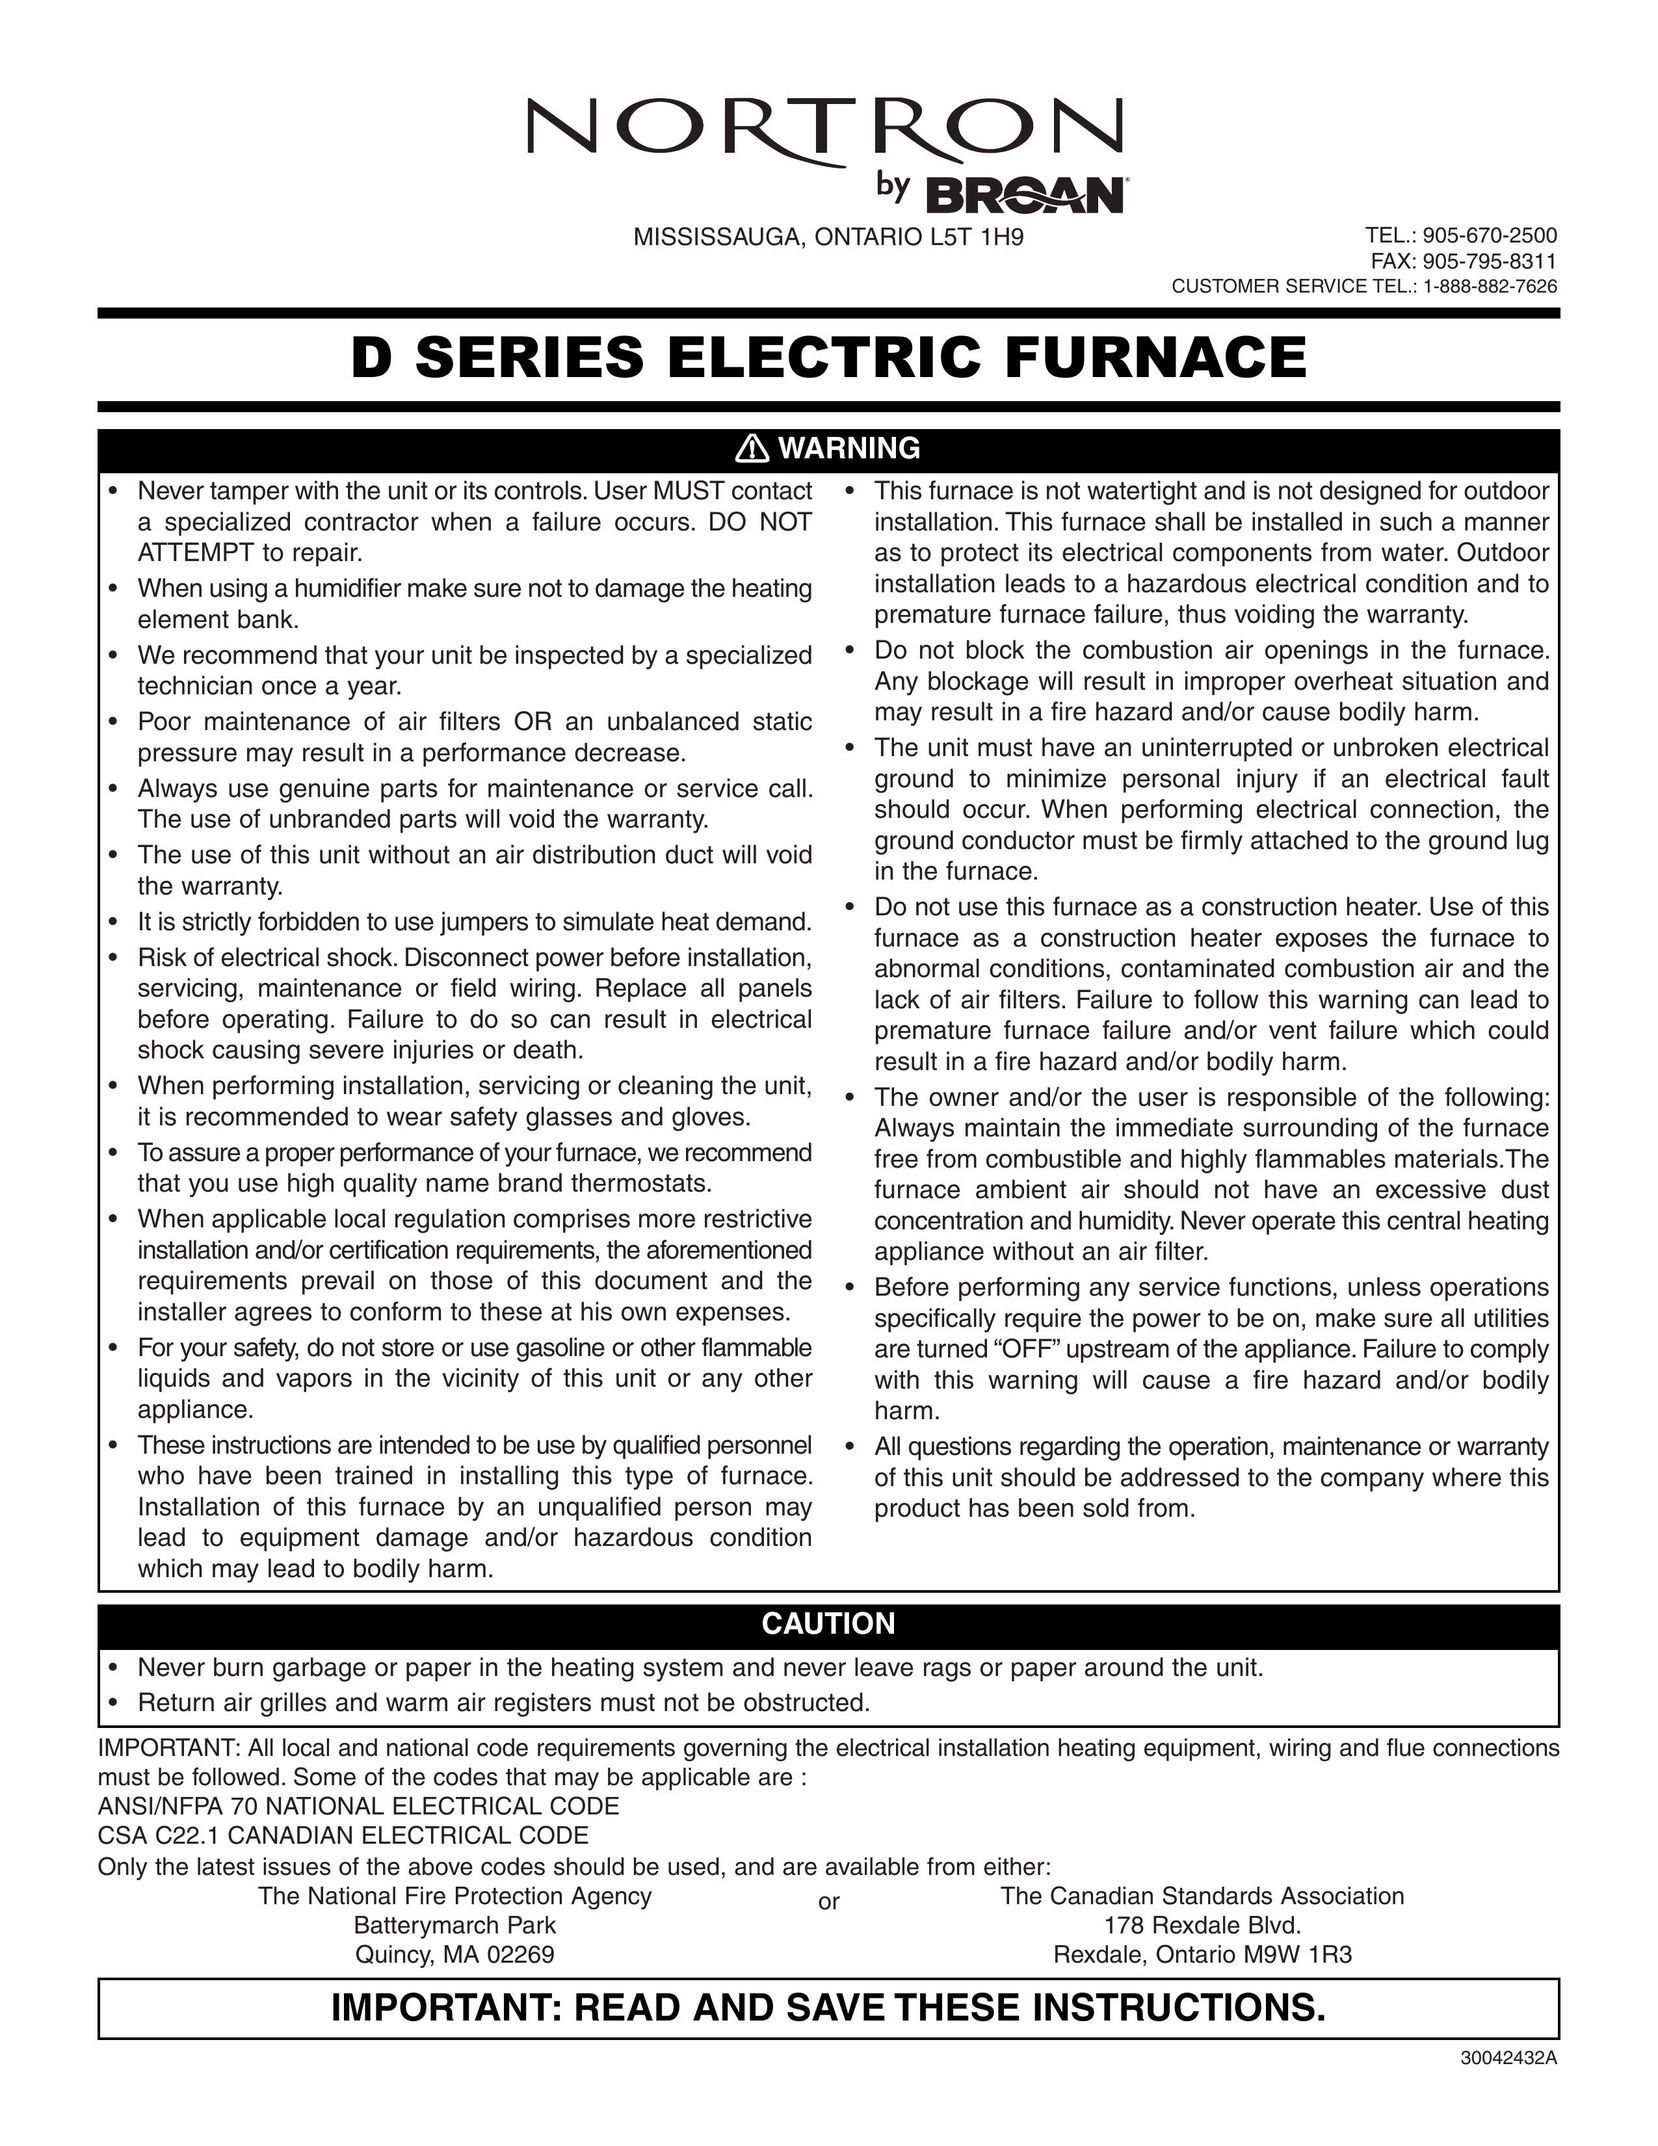 Broan D SERIES ELECTRIC FURNACE Furnace User Manual